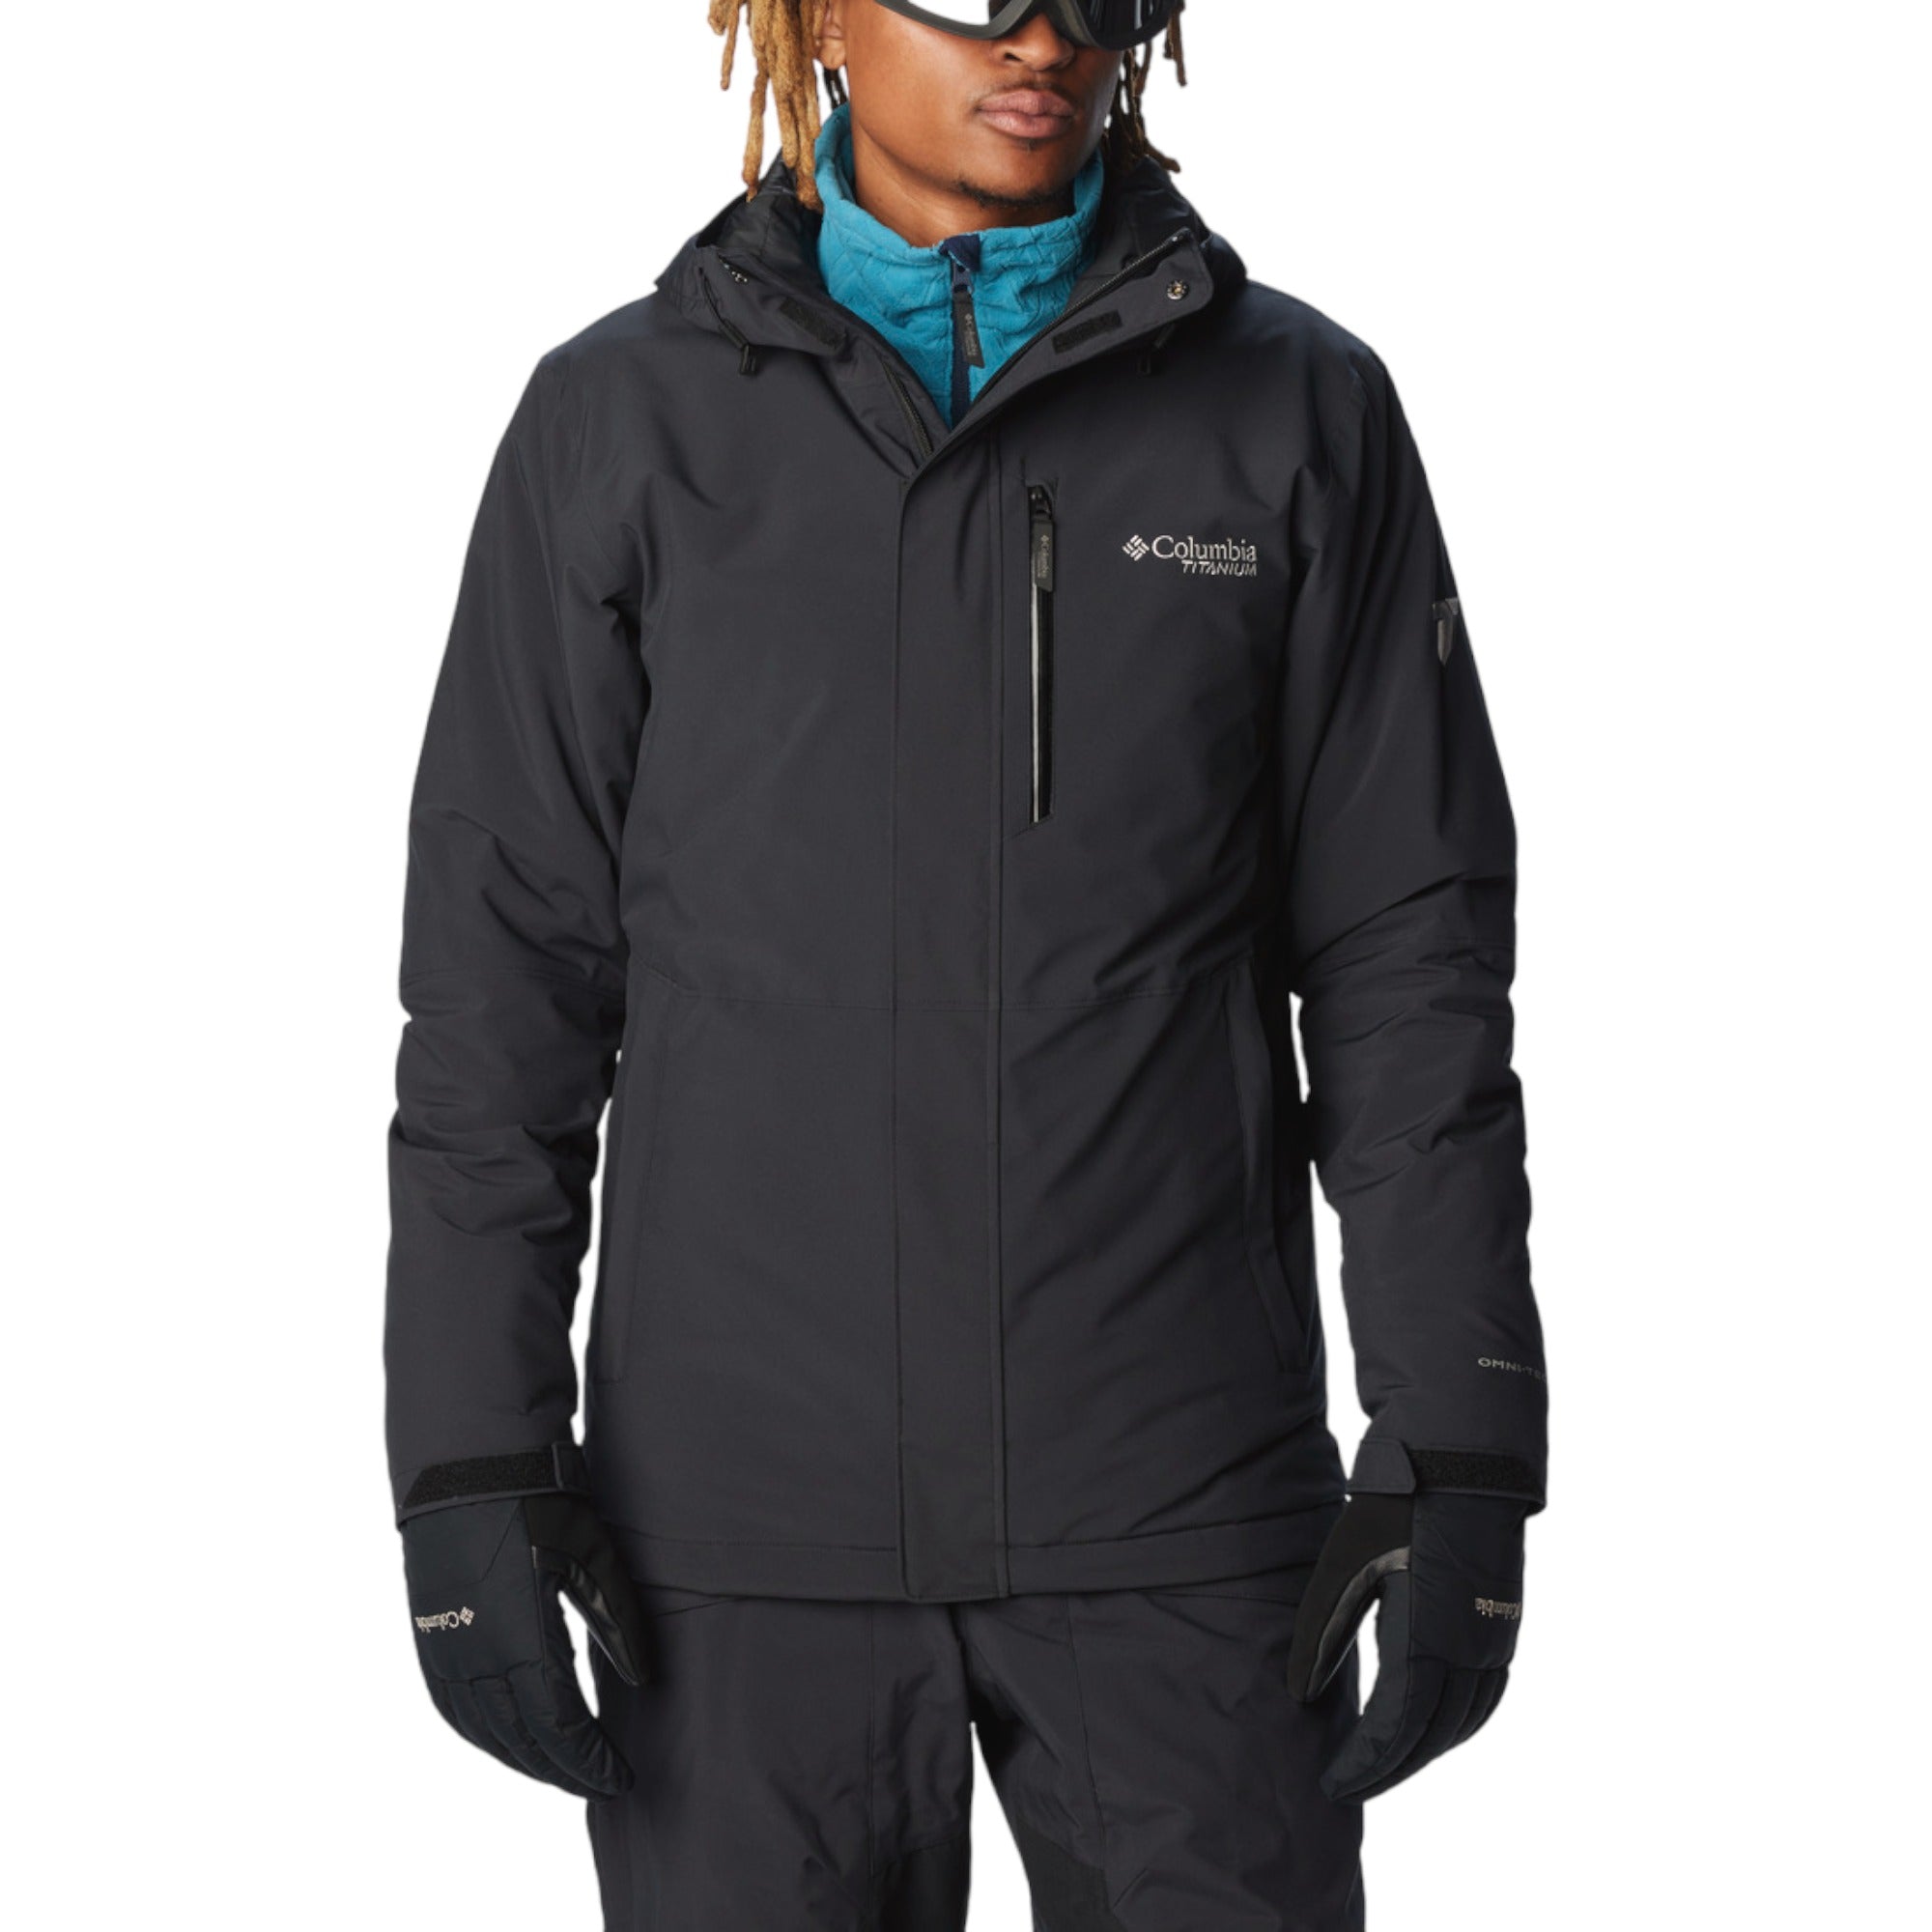 Columbia Titanium Omni-Tech Youth Snowboard Ski Pants Size 14/16 Black